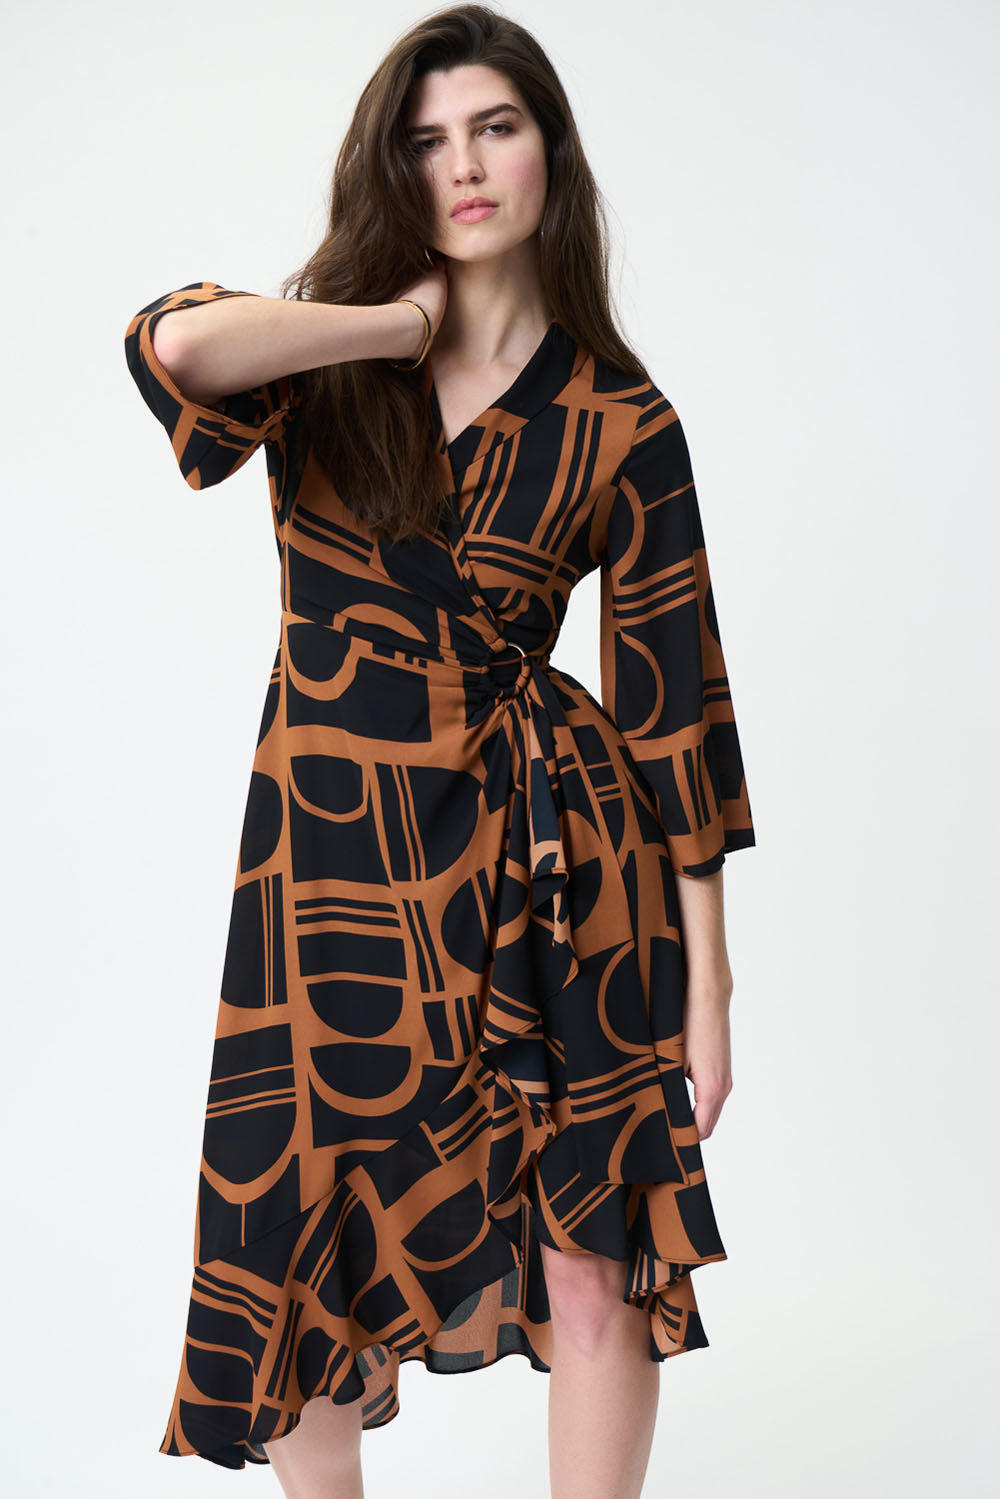 Joseph Ribkoff Maple-Black Wrap Dress Style 224086